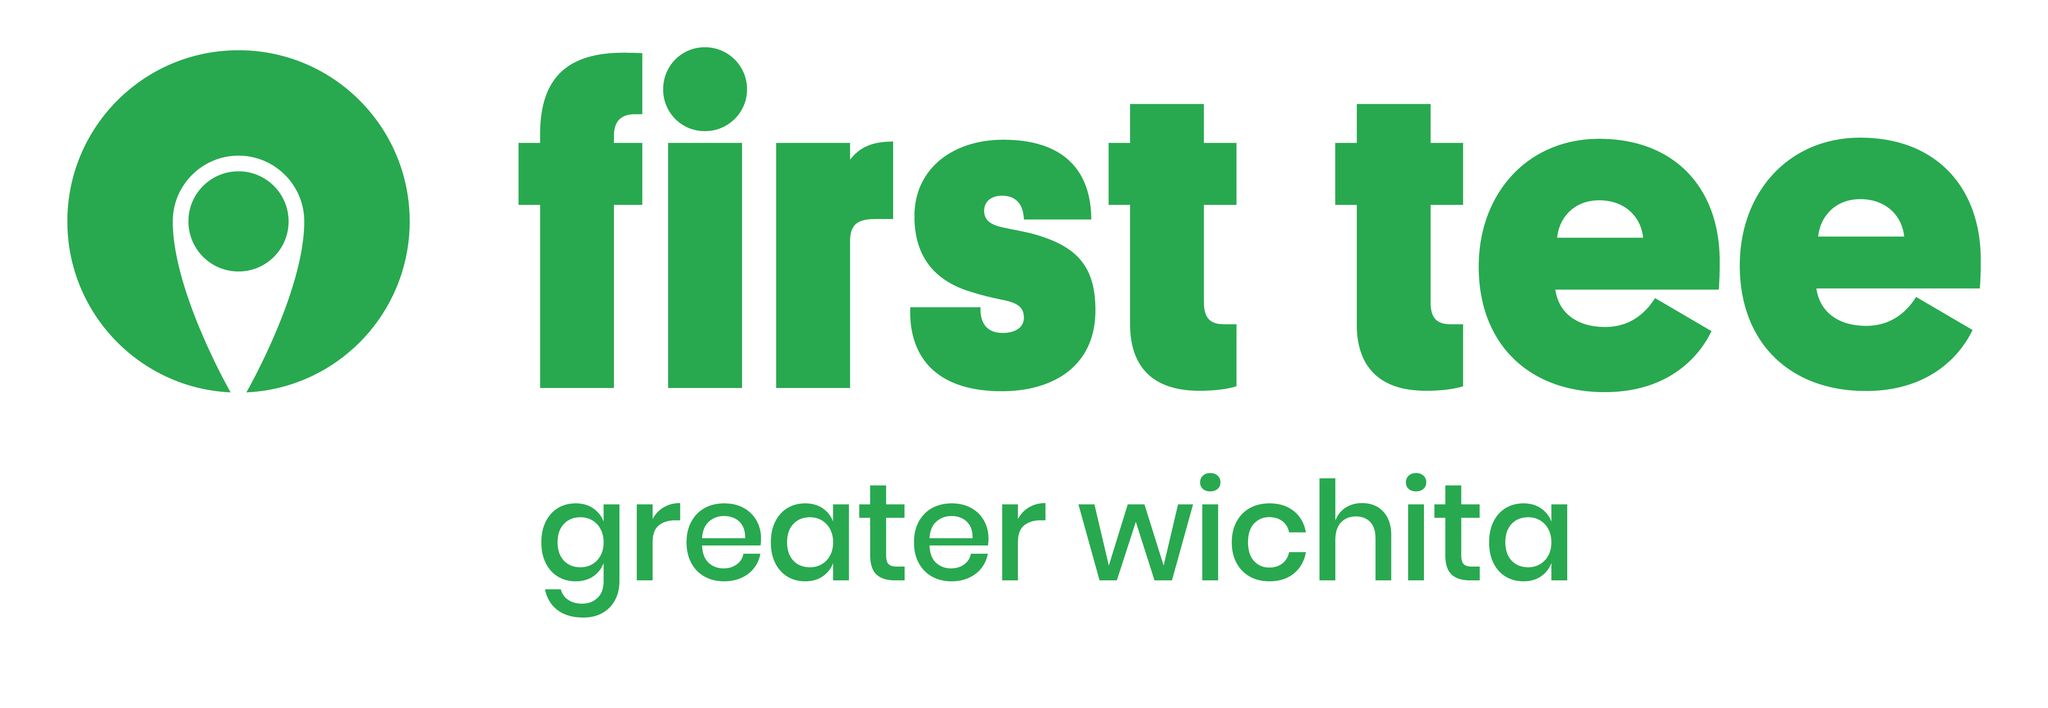 First Tee Greater Wichita logo